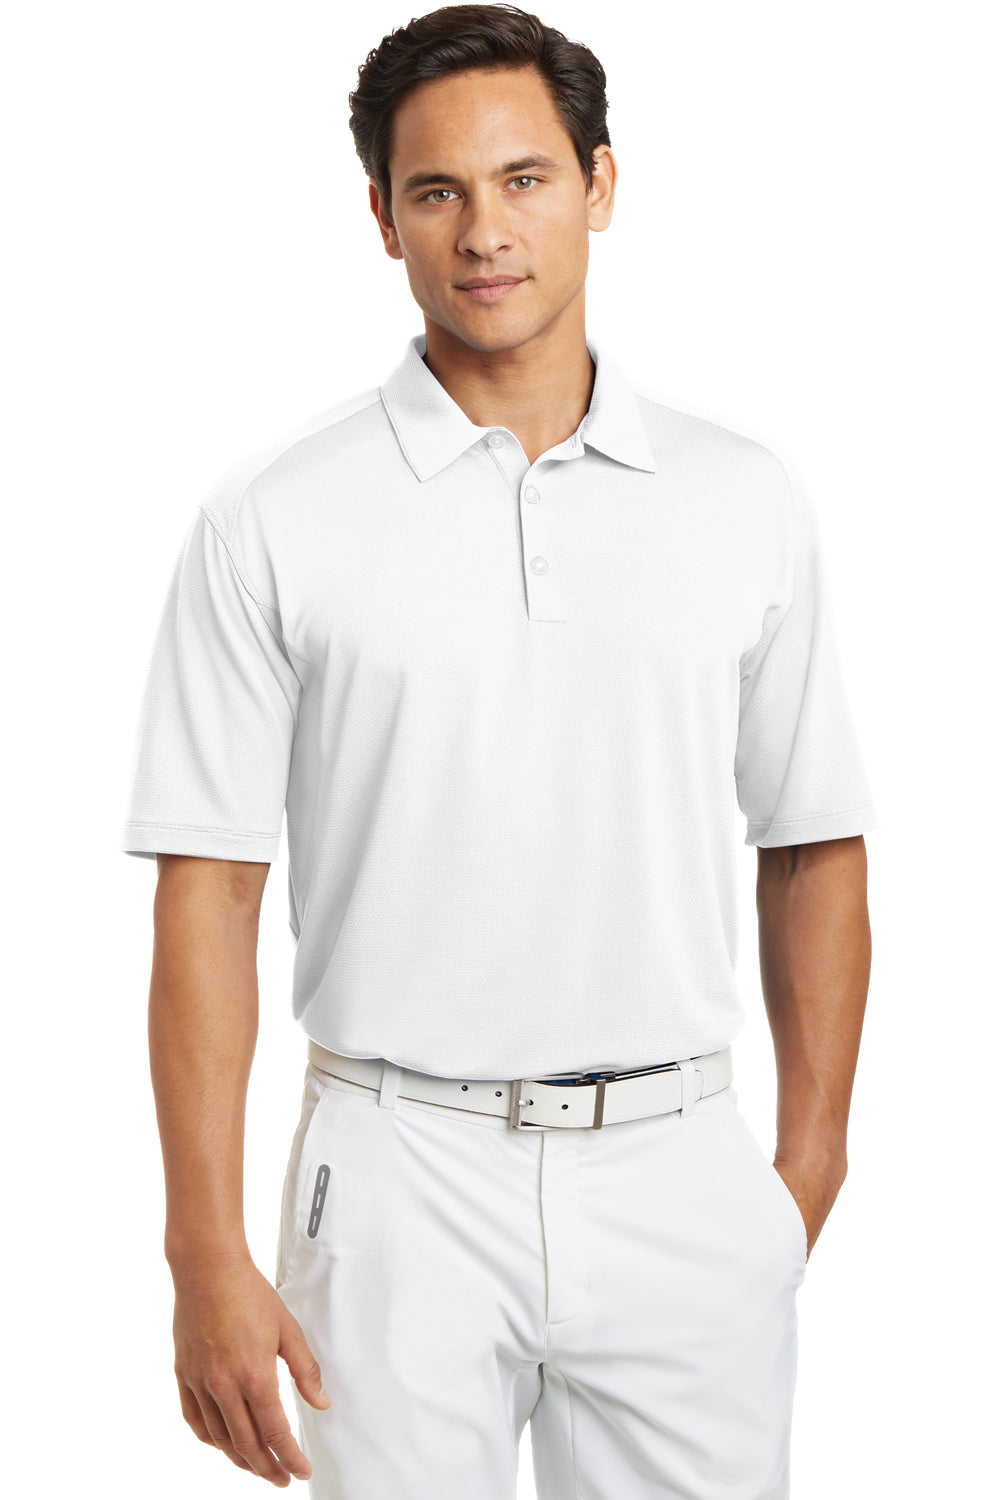 Nike 378453 Mens Dri-Fit Moisture Wicking Short Sleeve Polo Shirt White Front